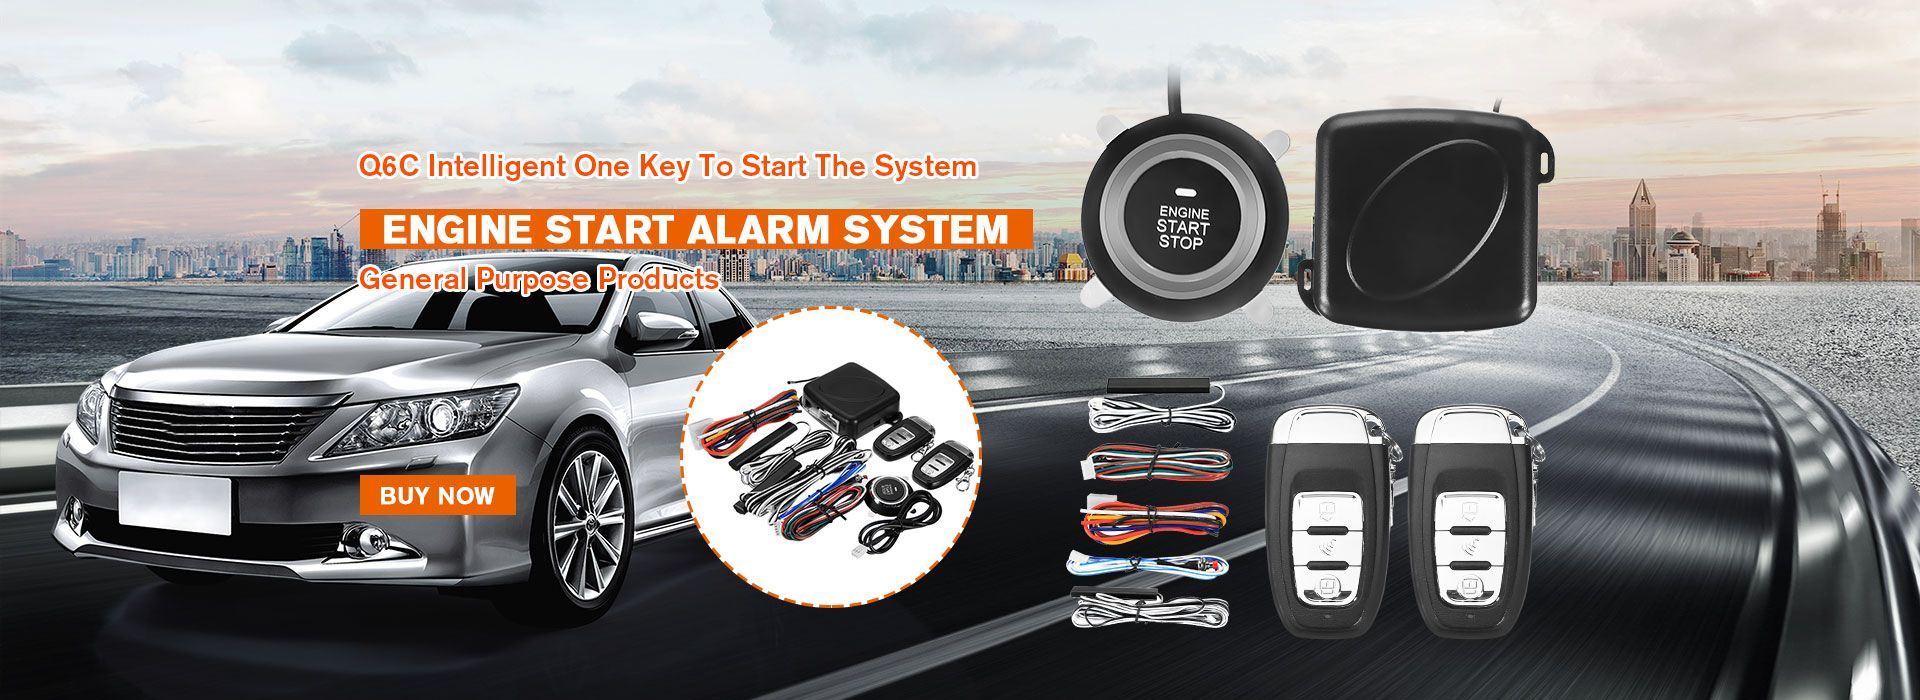 Universal-Smart-Car-PKE-Keyless-Entry-Alarm-System-Engine-Push-Start-Button-with-Remote-for-12V-Vehi-1346633